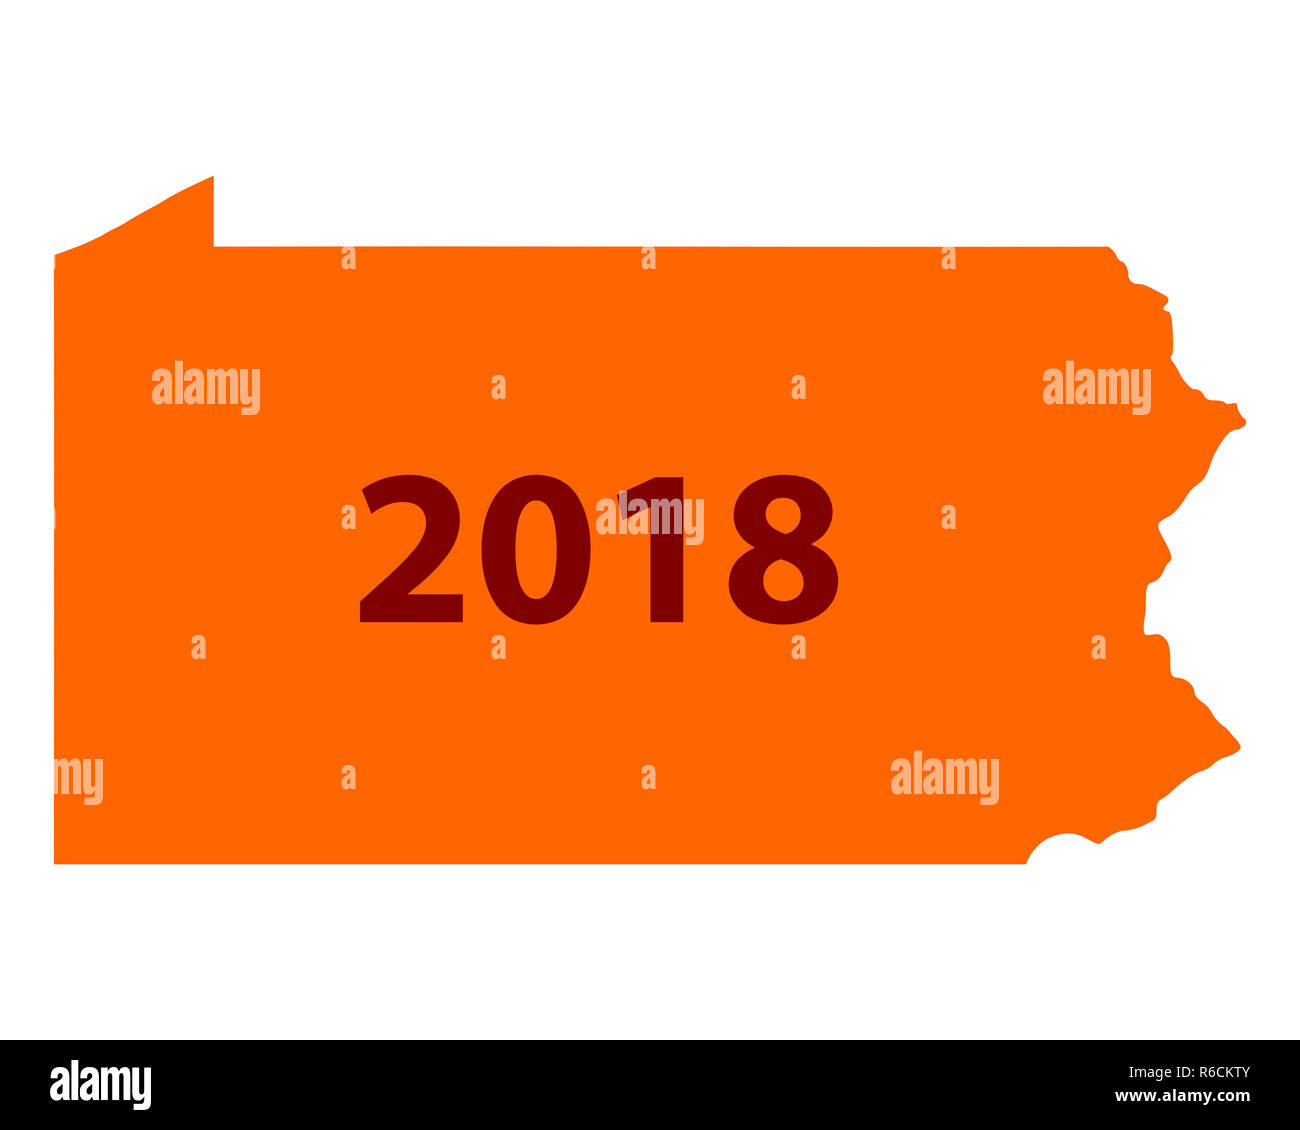 Map Of Pennsylvania 2018 R6CKTY 